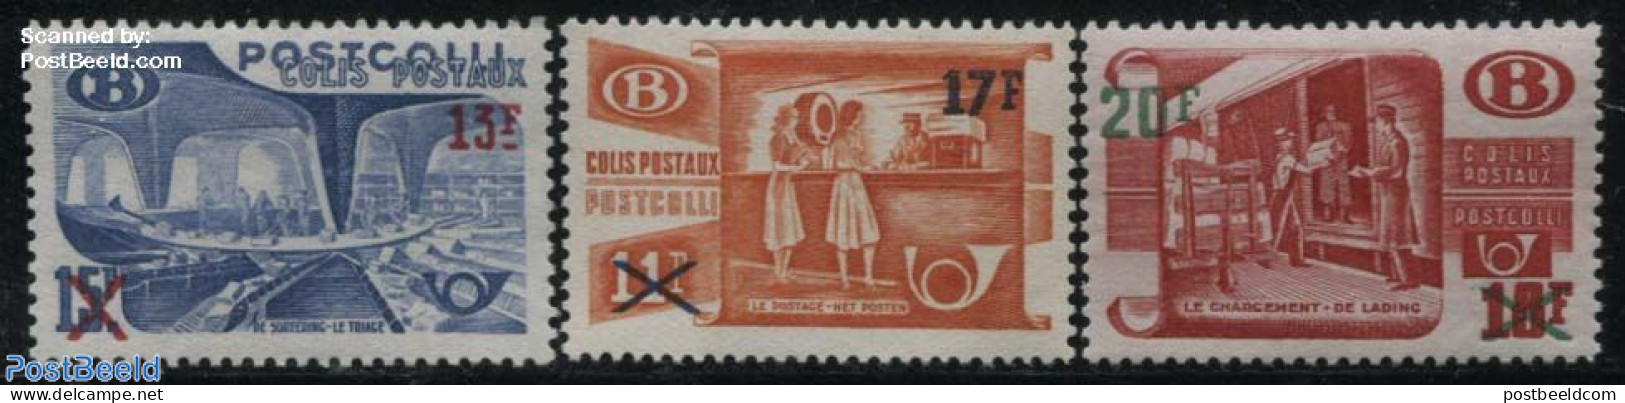 Belgium 1953 Parcel Stamps 3v, Unused (hinged), Transport - Railways - Unused Stamps